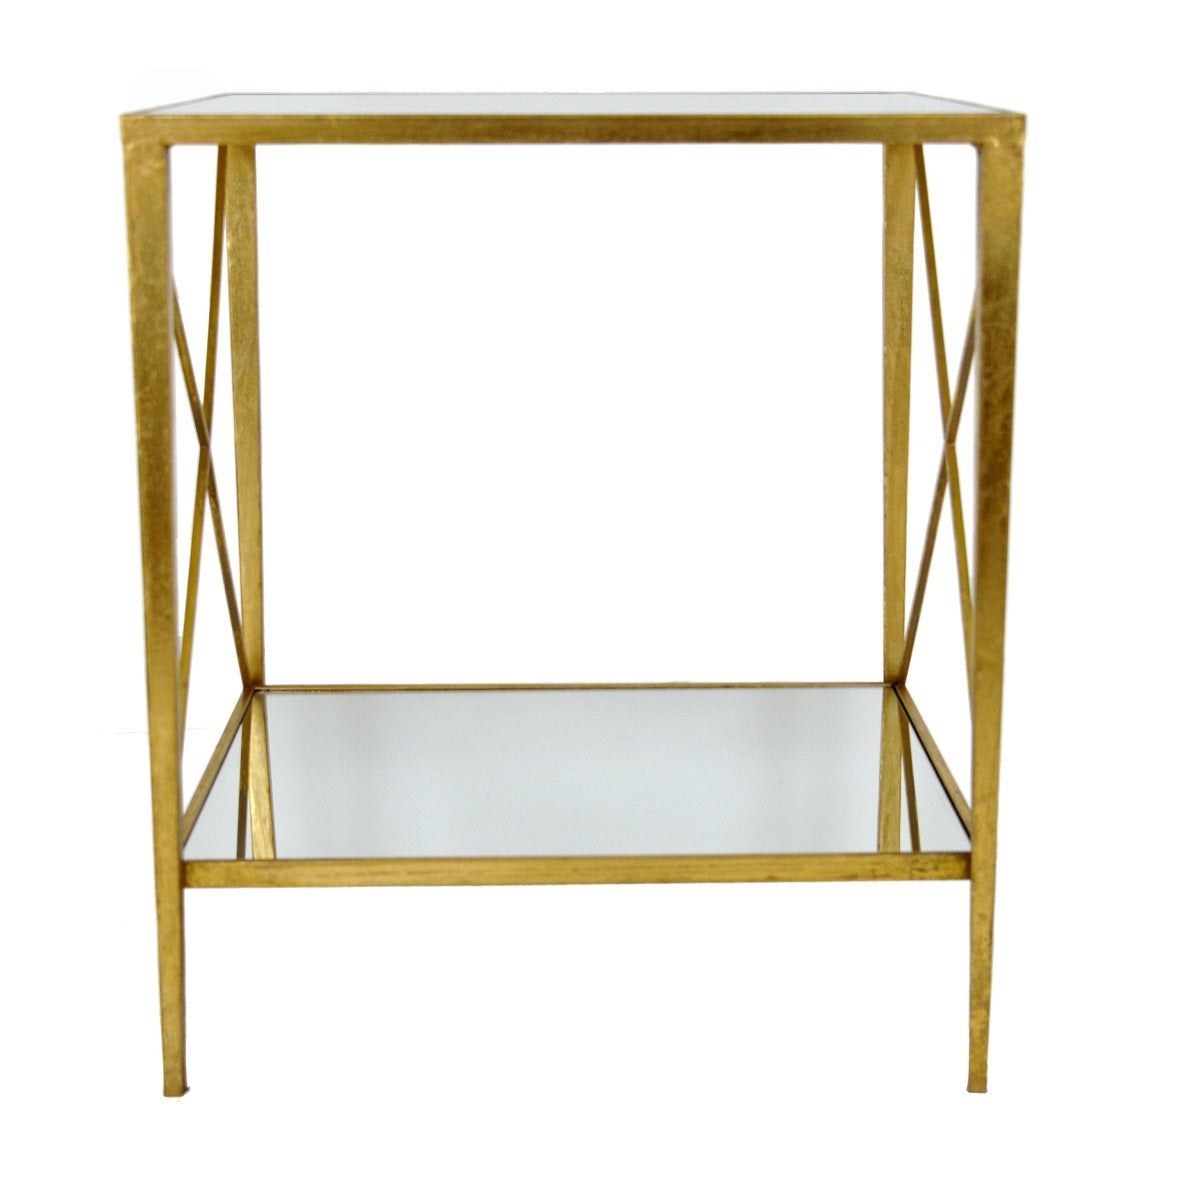 Gemma Gold Leaf Side Table with 2 Shelves - Lillian Home 